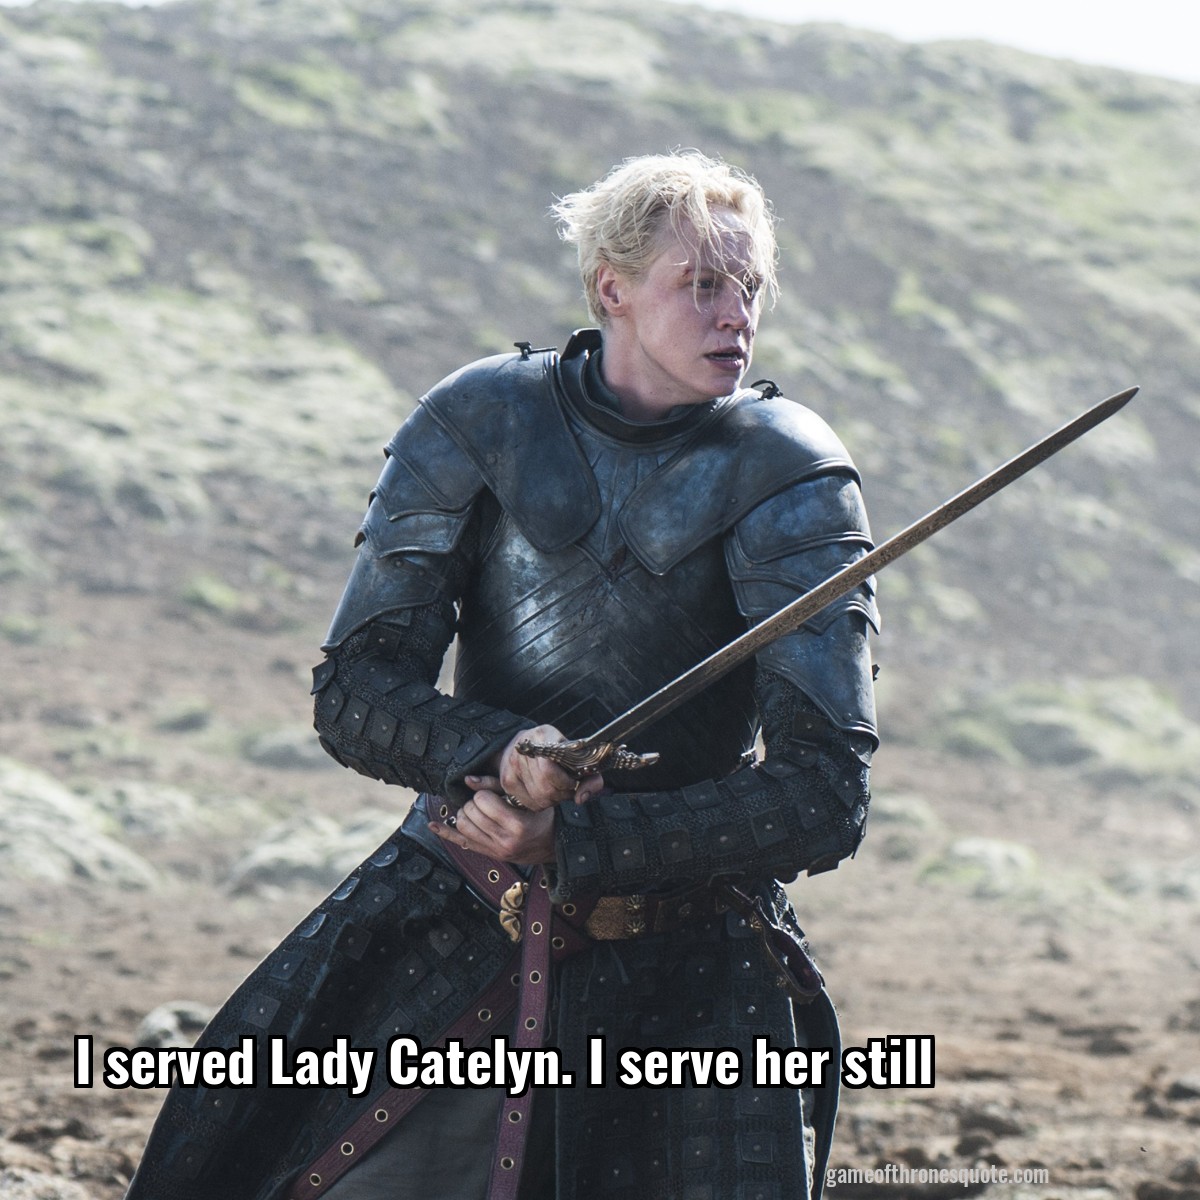 I served Lady Catelyn. I serve her still